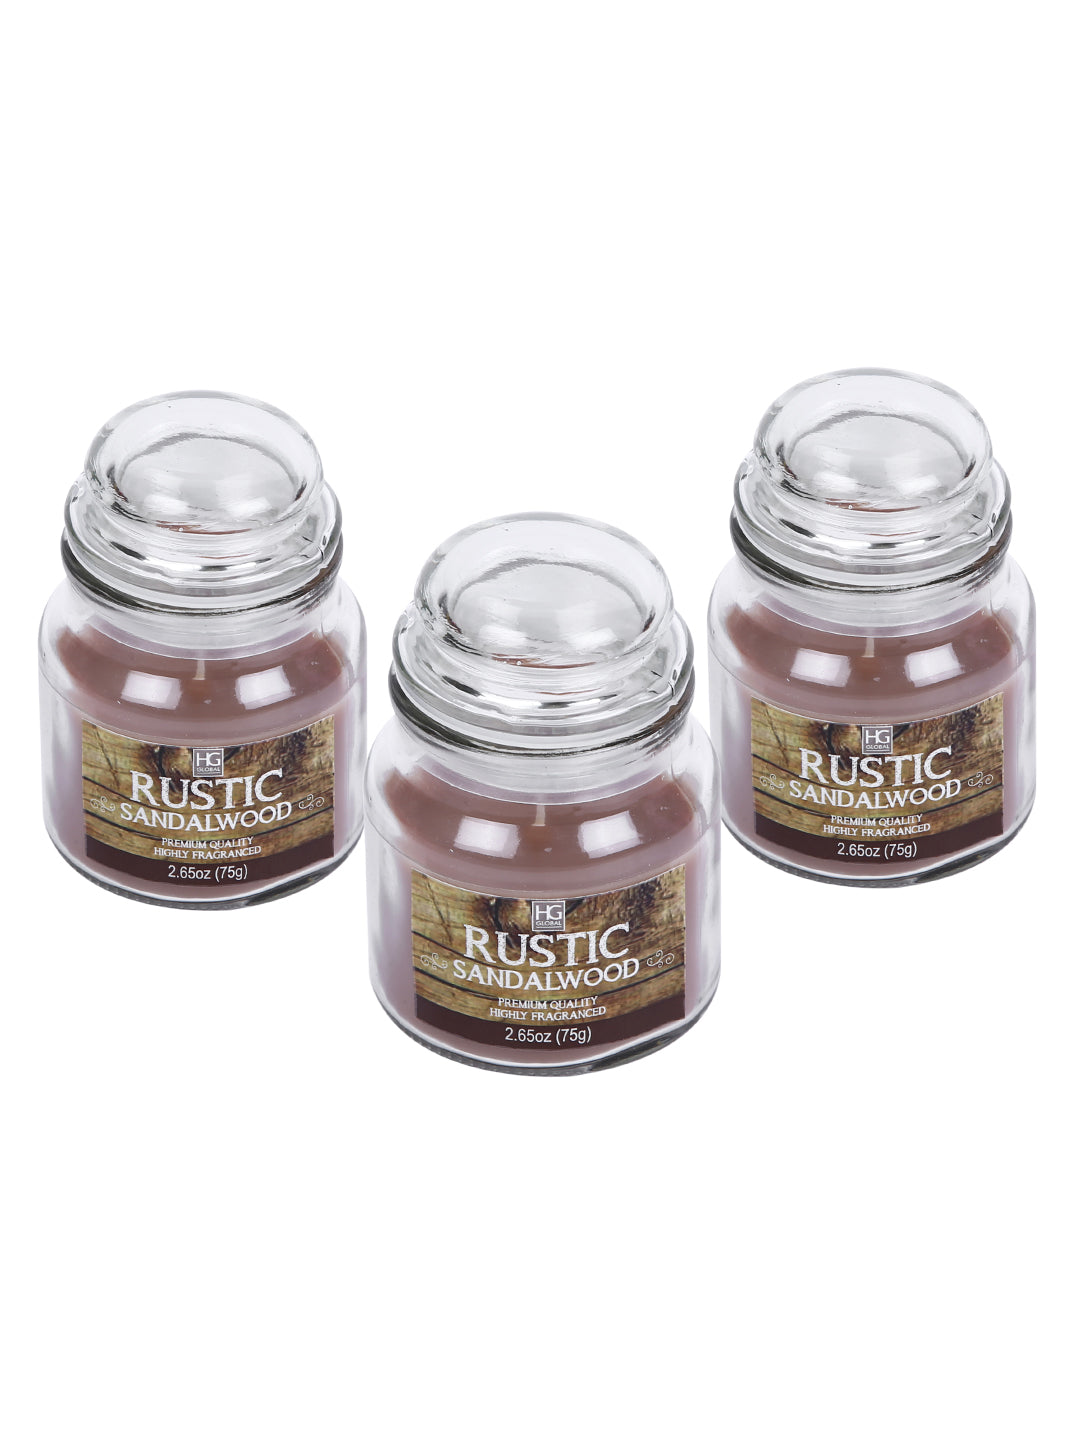 Set of 3 Hosley® Rustic Sandalwood Highly Fragranced Jar Candles, 2.65 Oz wax each